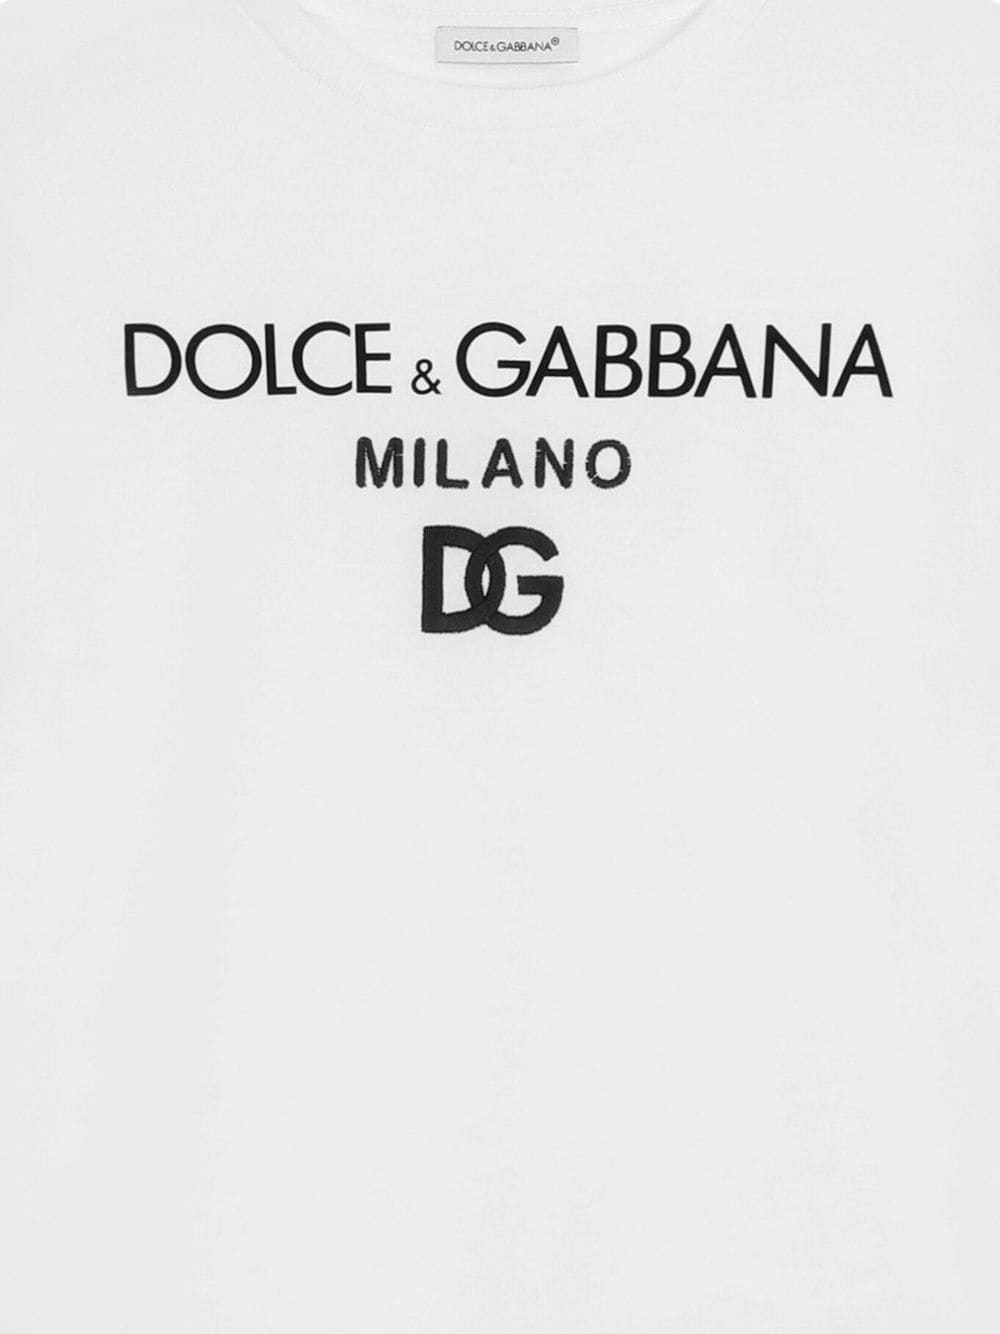 T-shirt DG Milano con stampa